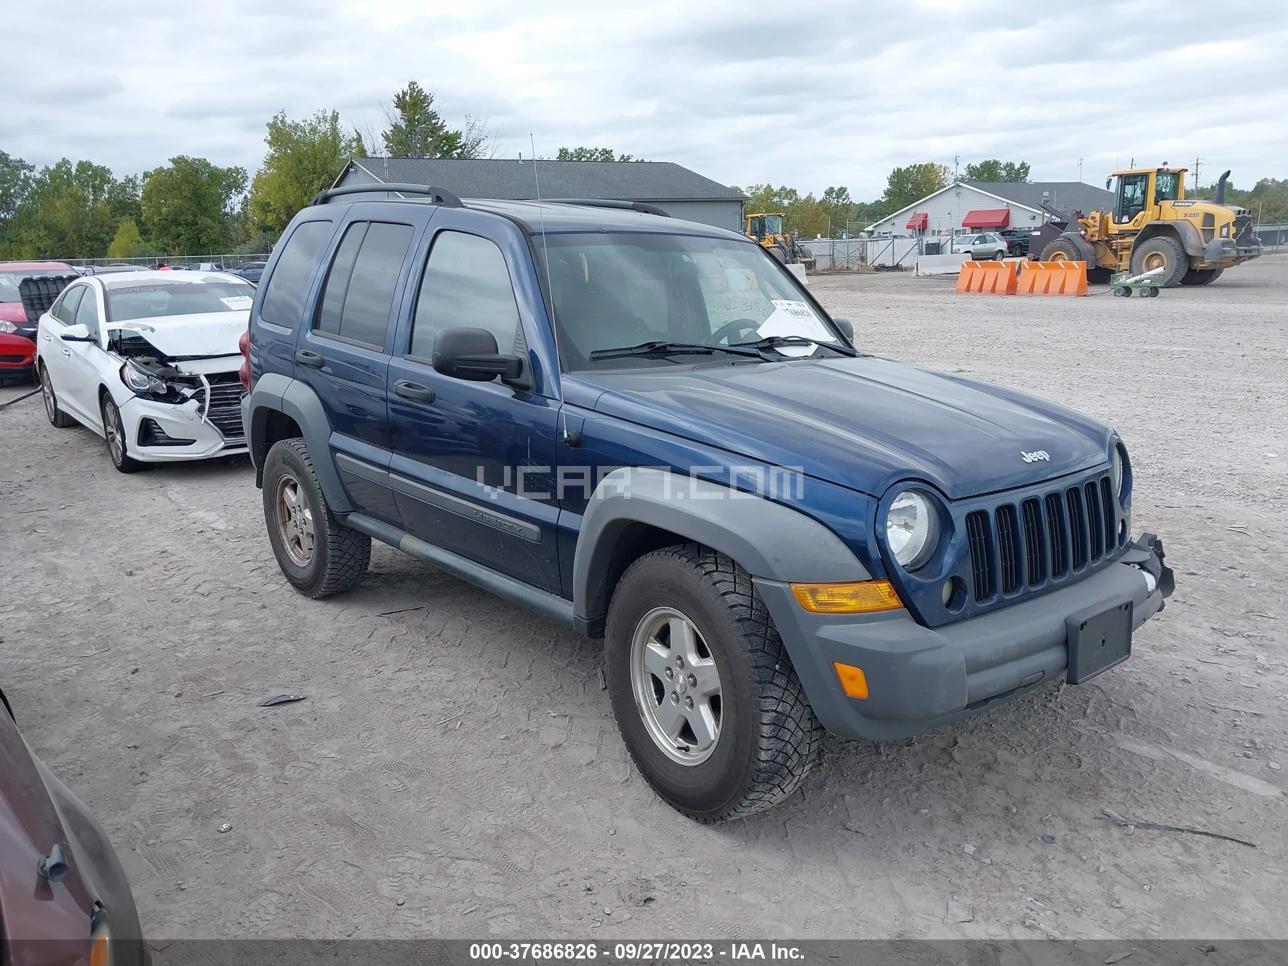 VIN: 1J4GK48KX5W598084 - jeep liberty (north america)